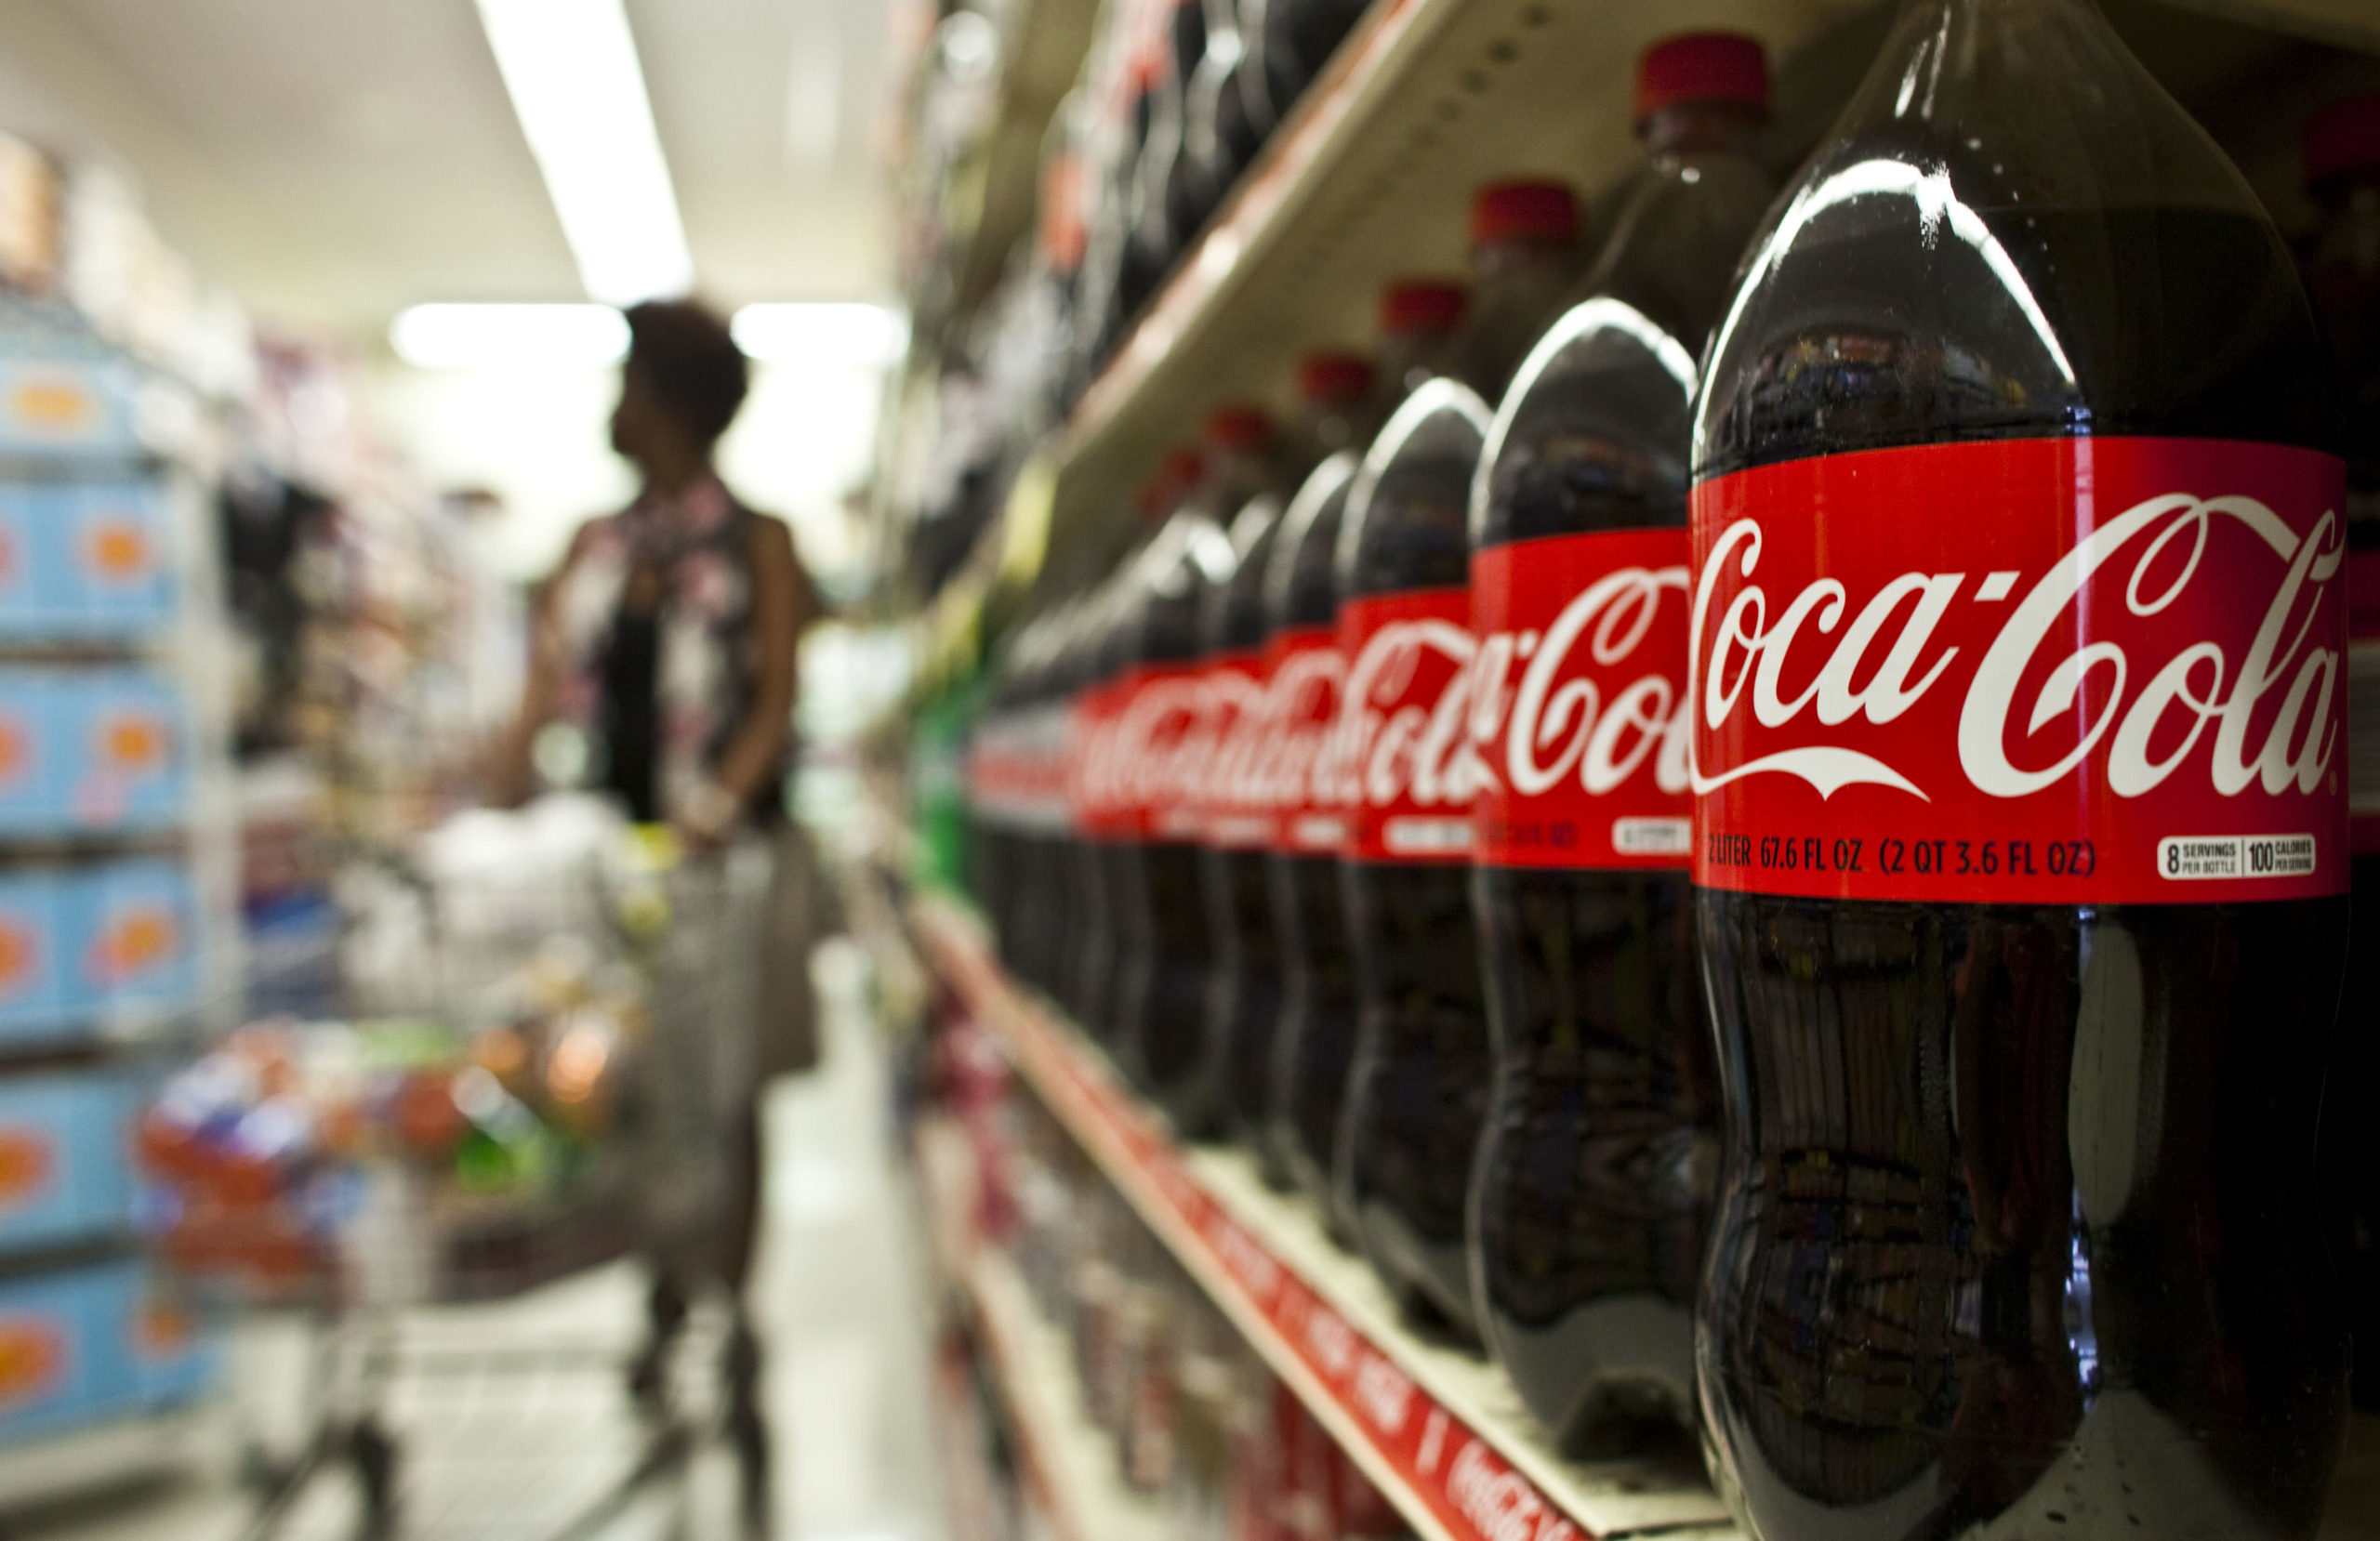 Coca-Cola (KO) earnings Q2 2020 beat estimates